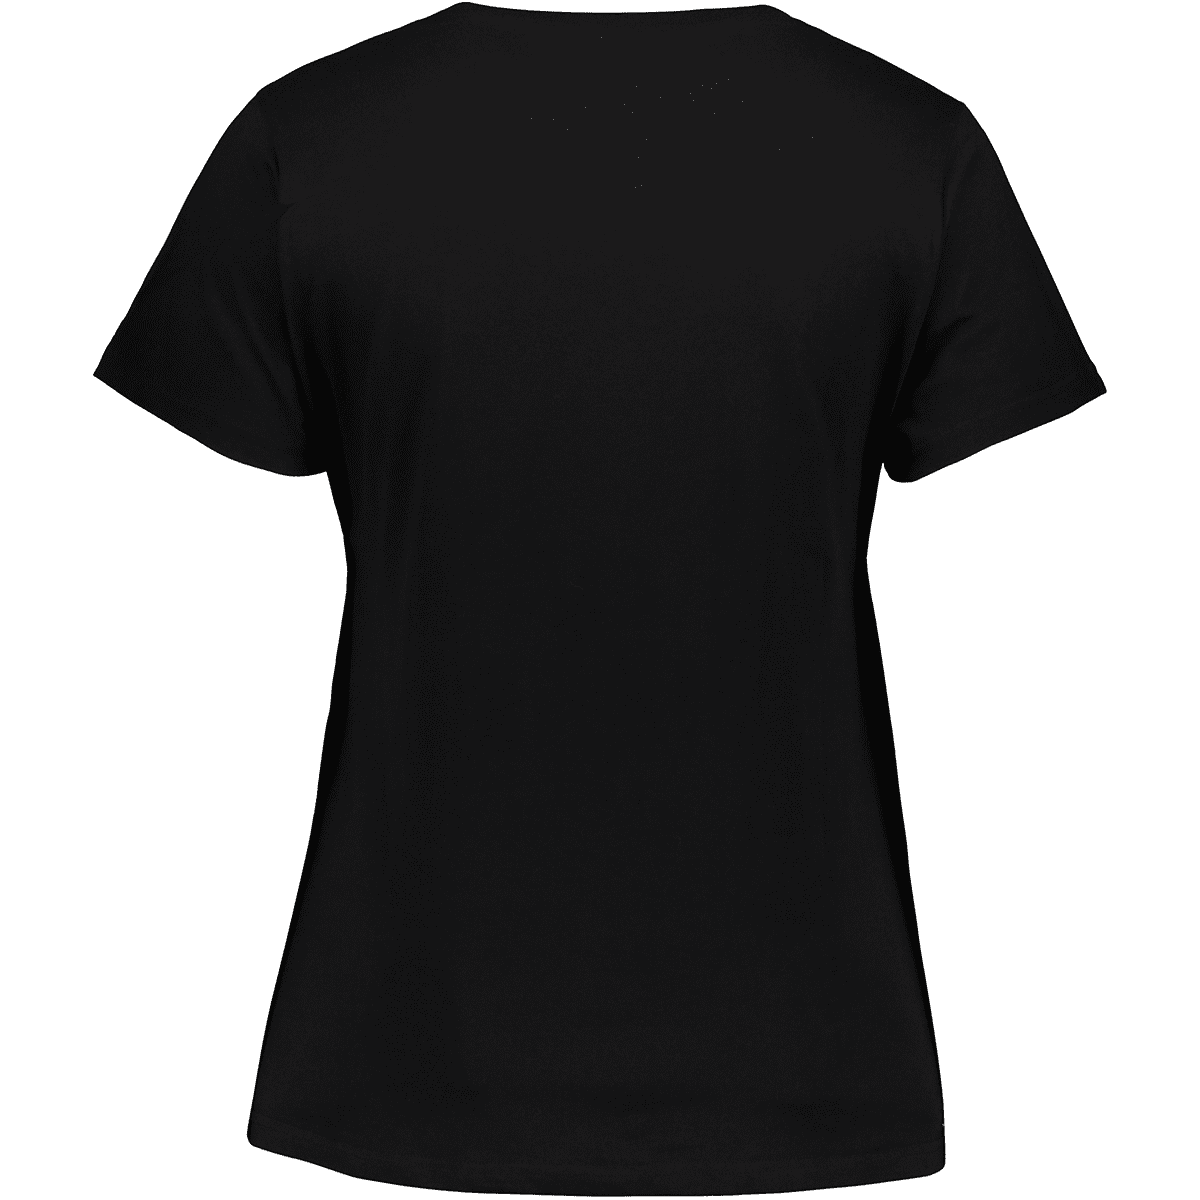 FlekmanArt Ladies Black Shirt Blank Shirts For Heat Transfer Stretch Tee  Shirts Women Cute Black Tops at  Women's Clothing store